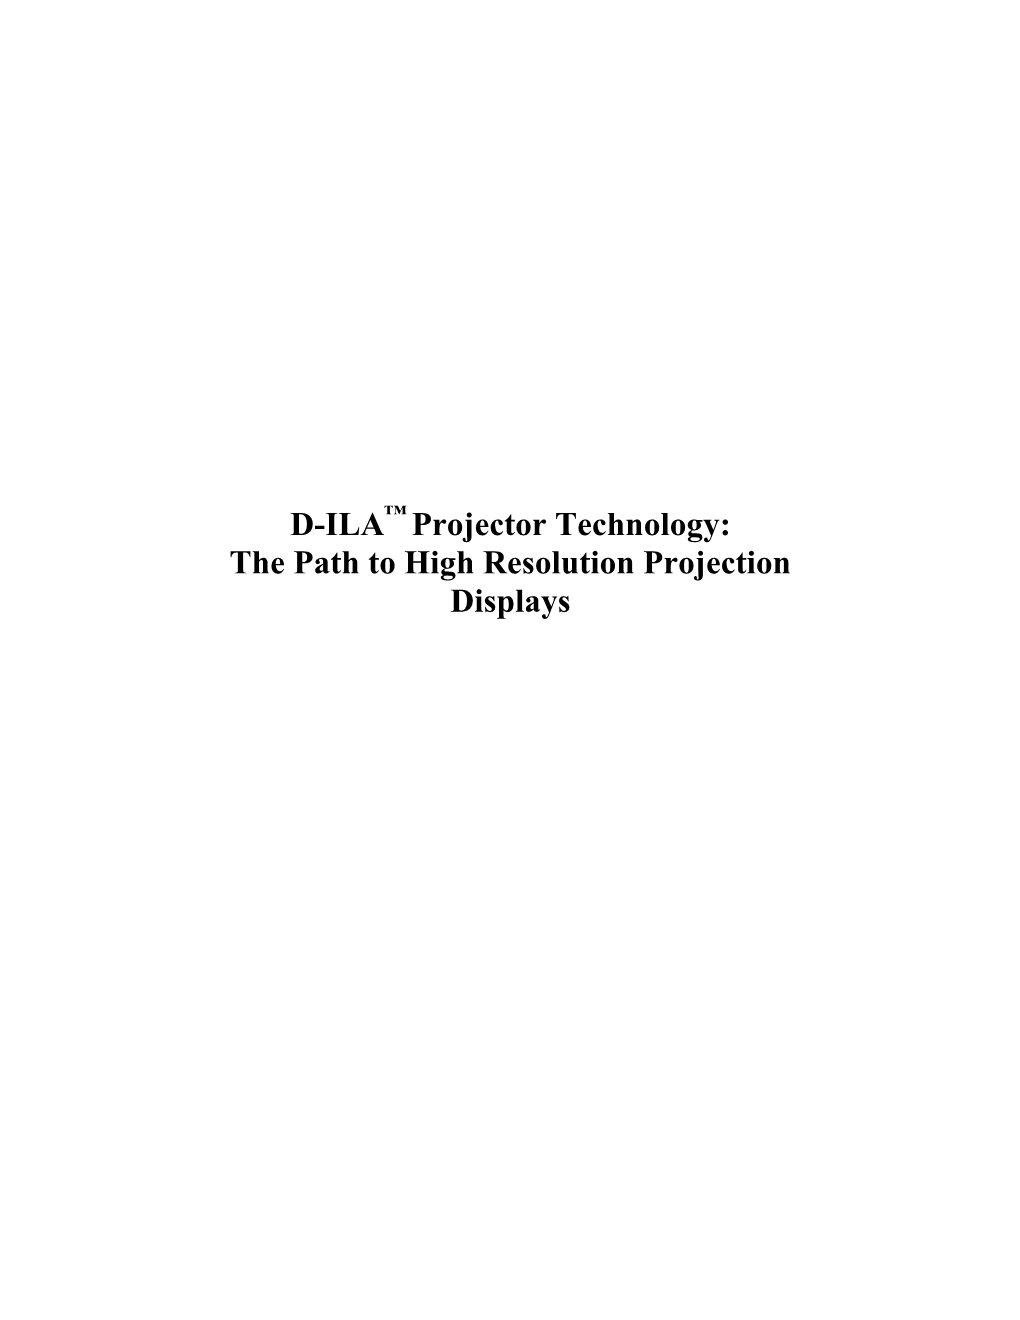 D-ILA Projector Technology